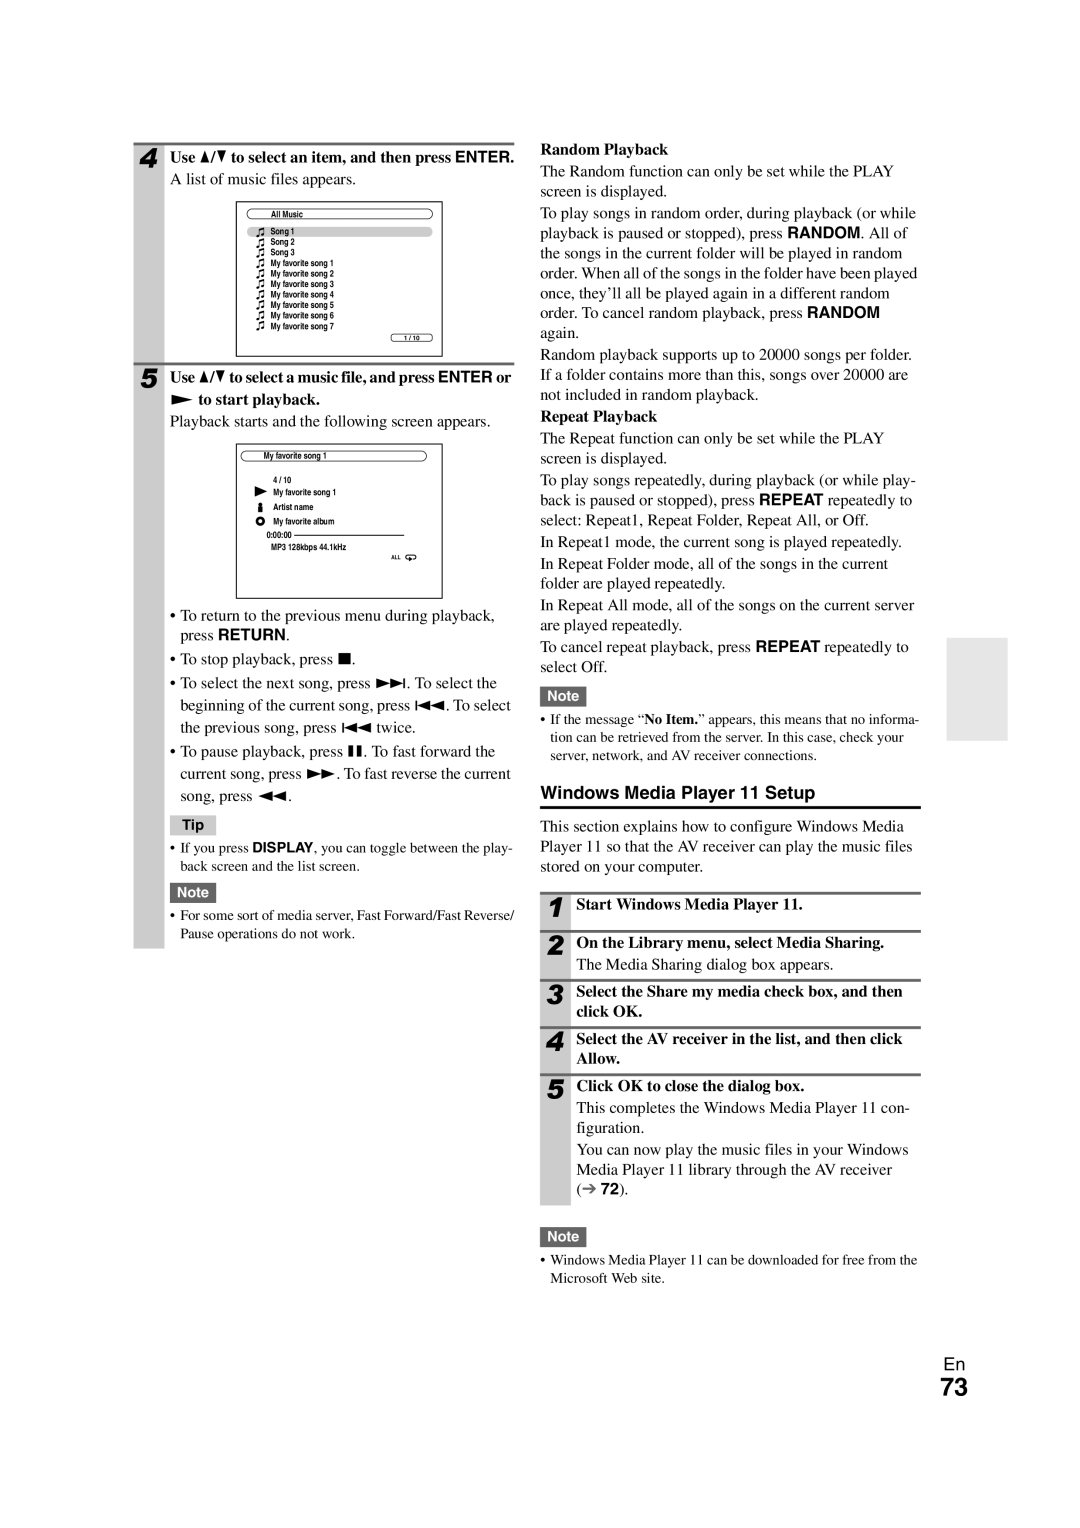 Onkyo TX-NR3008 instruction manual Windows Media Player 11 Setup 